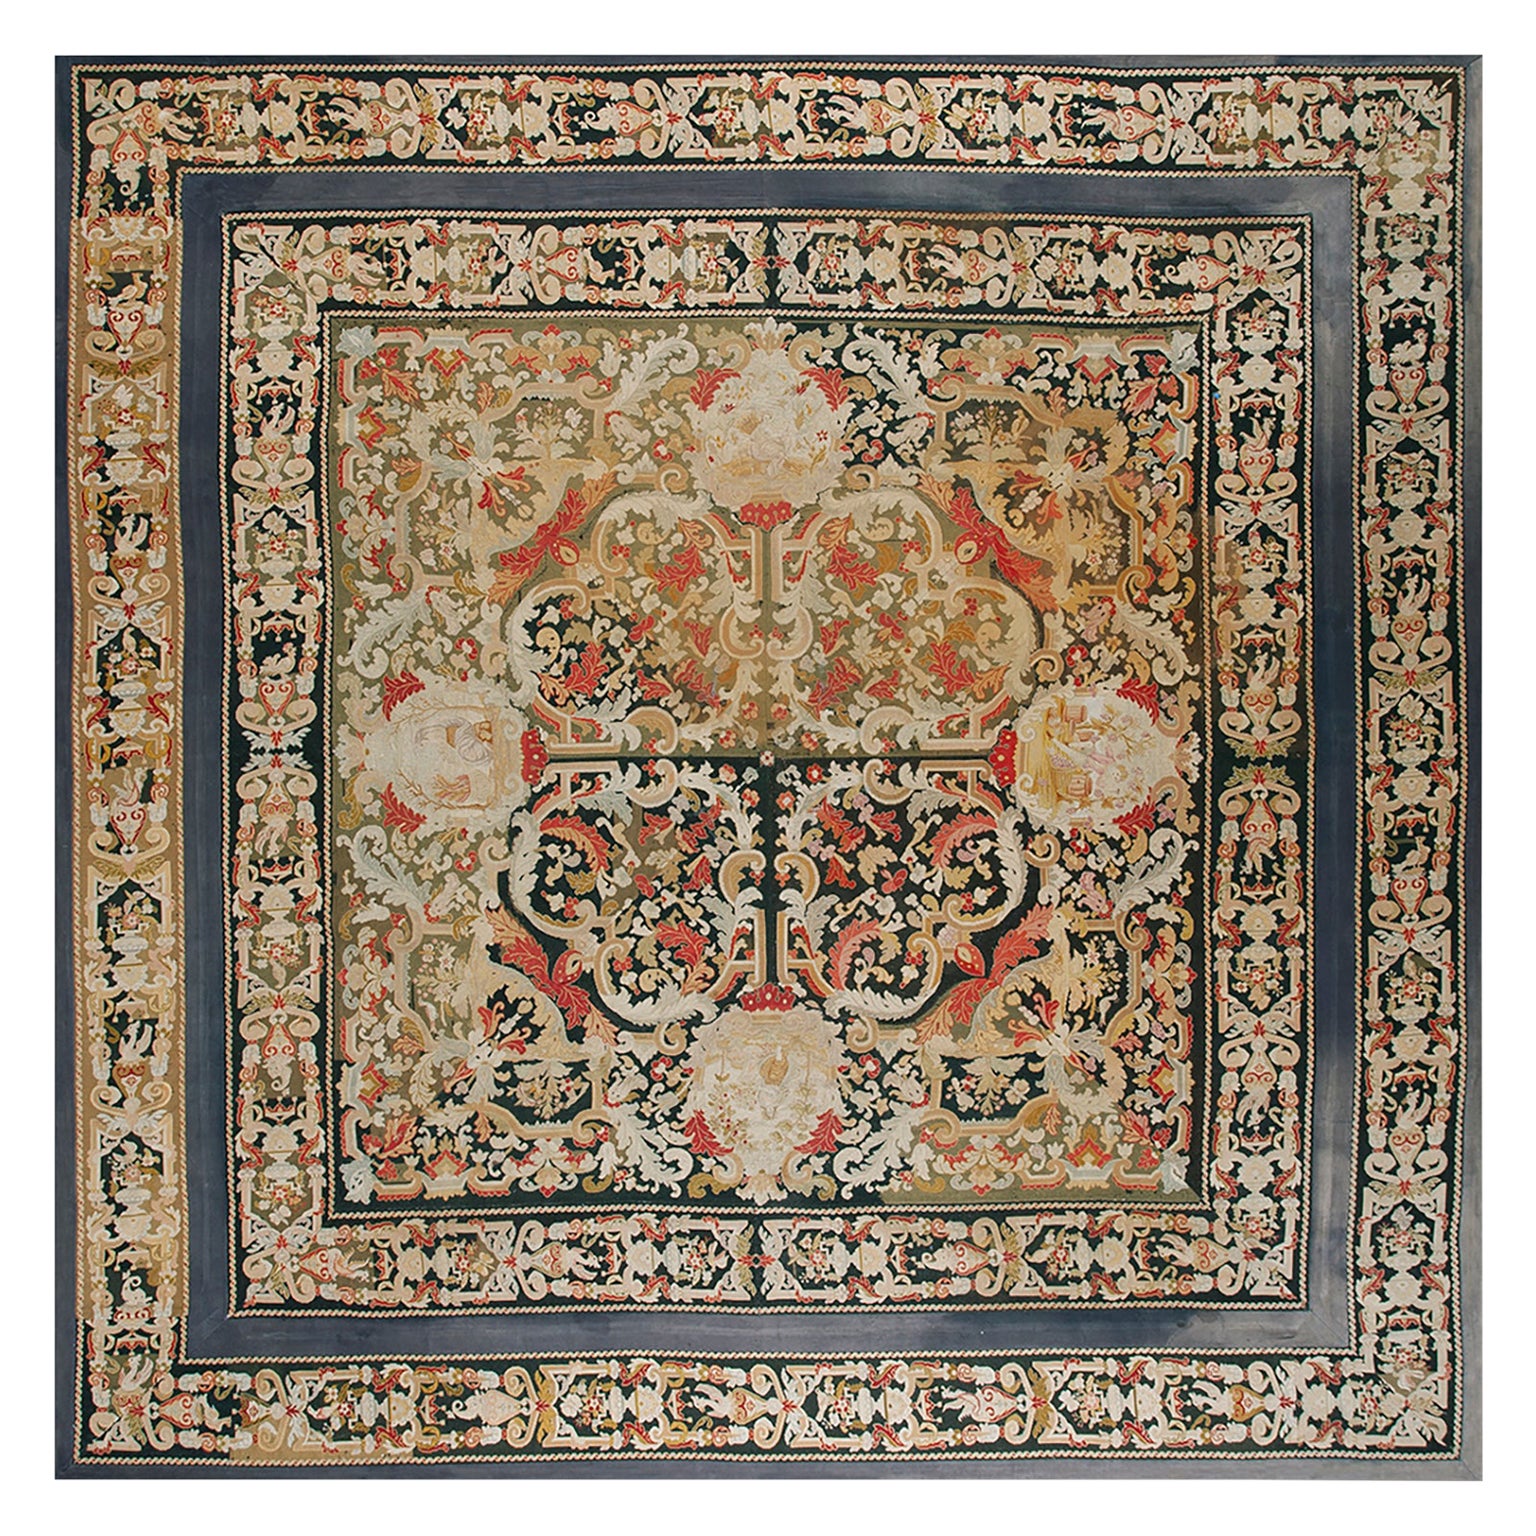 19th Century French Needlepoint Carpet ( 11' x 11' - 335 x 335 )